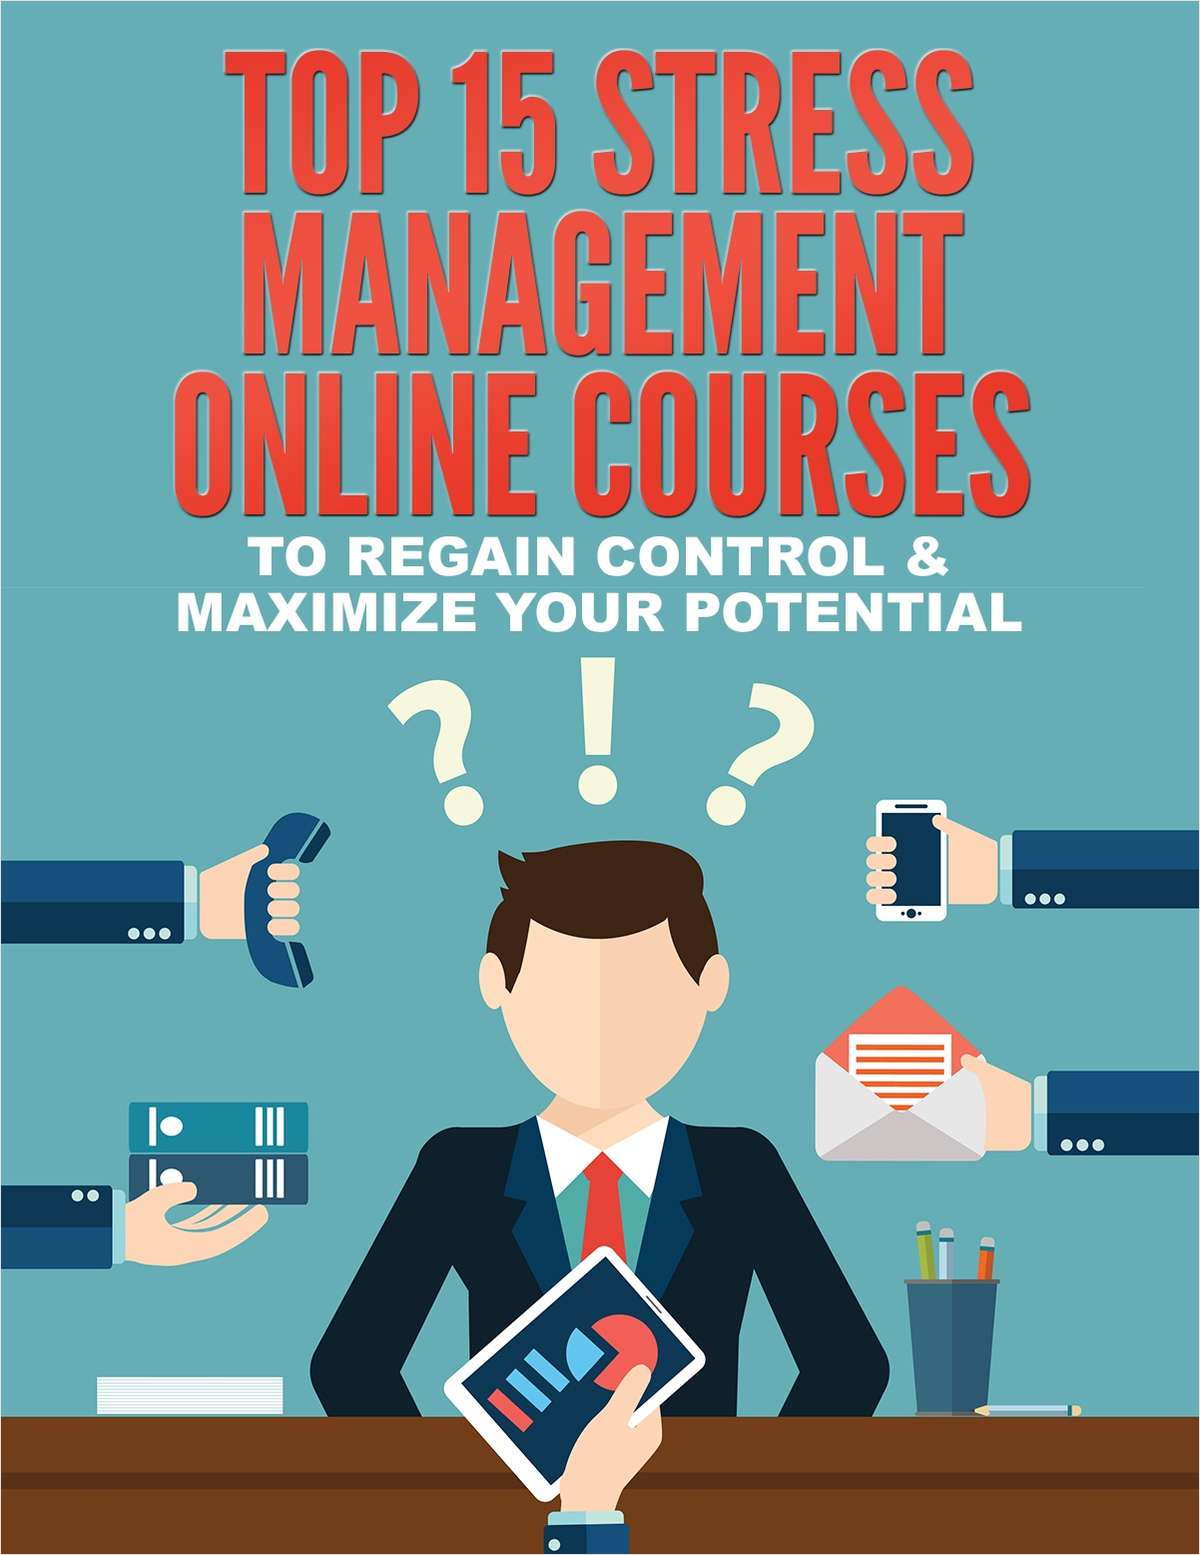 Top 15 Stress Management Online Courses to Regain Control & Maximize Your Potential